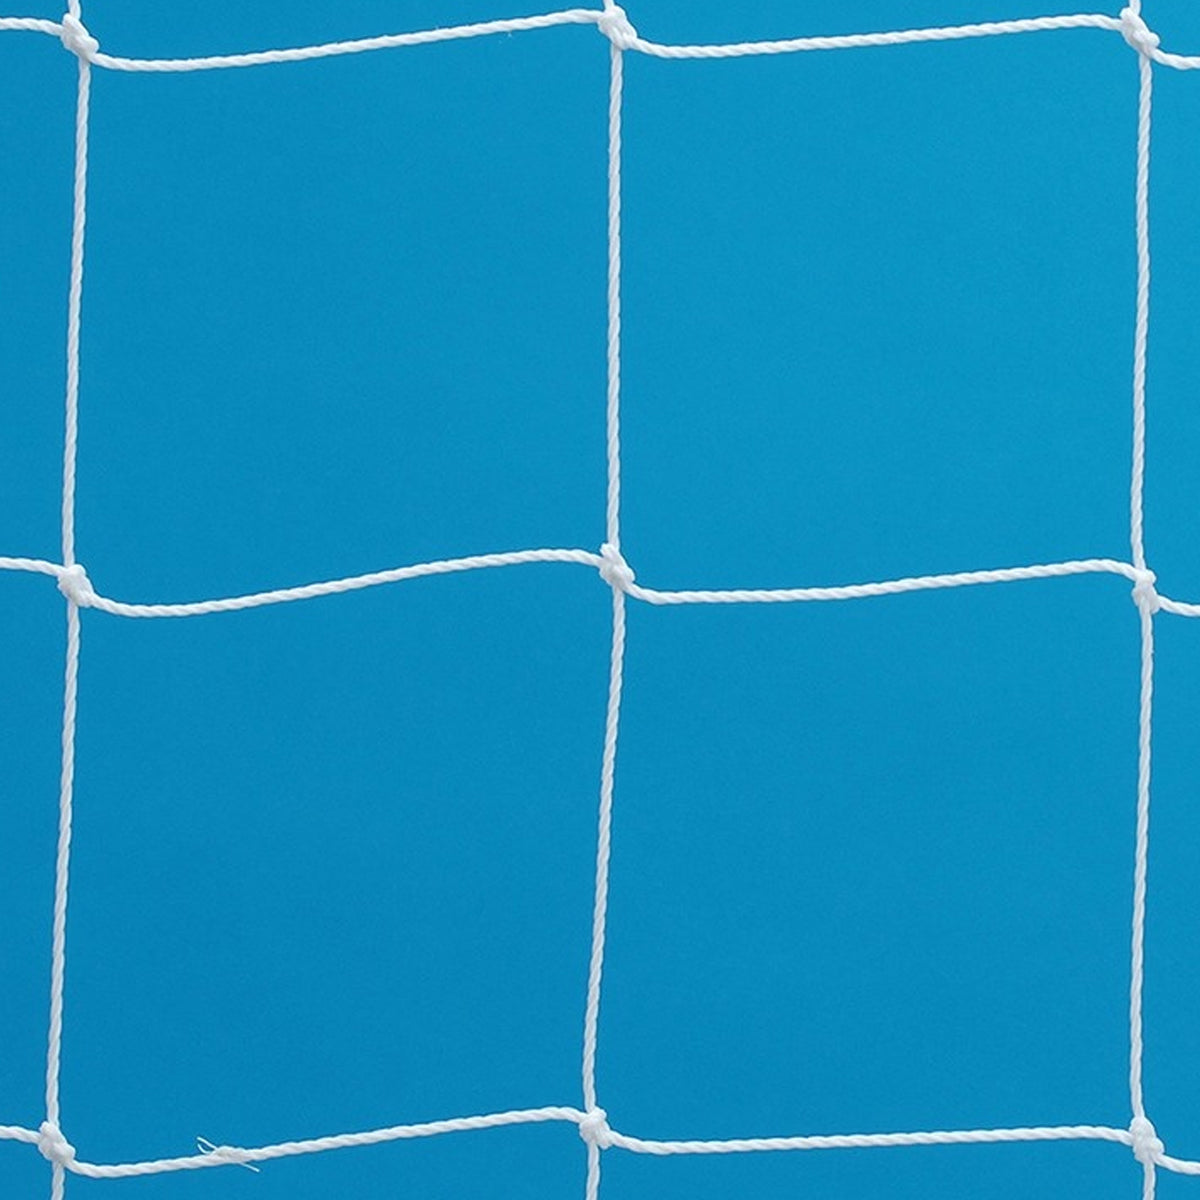 5-a-side Football Goal Nets